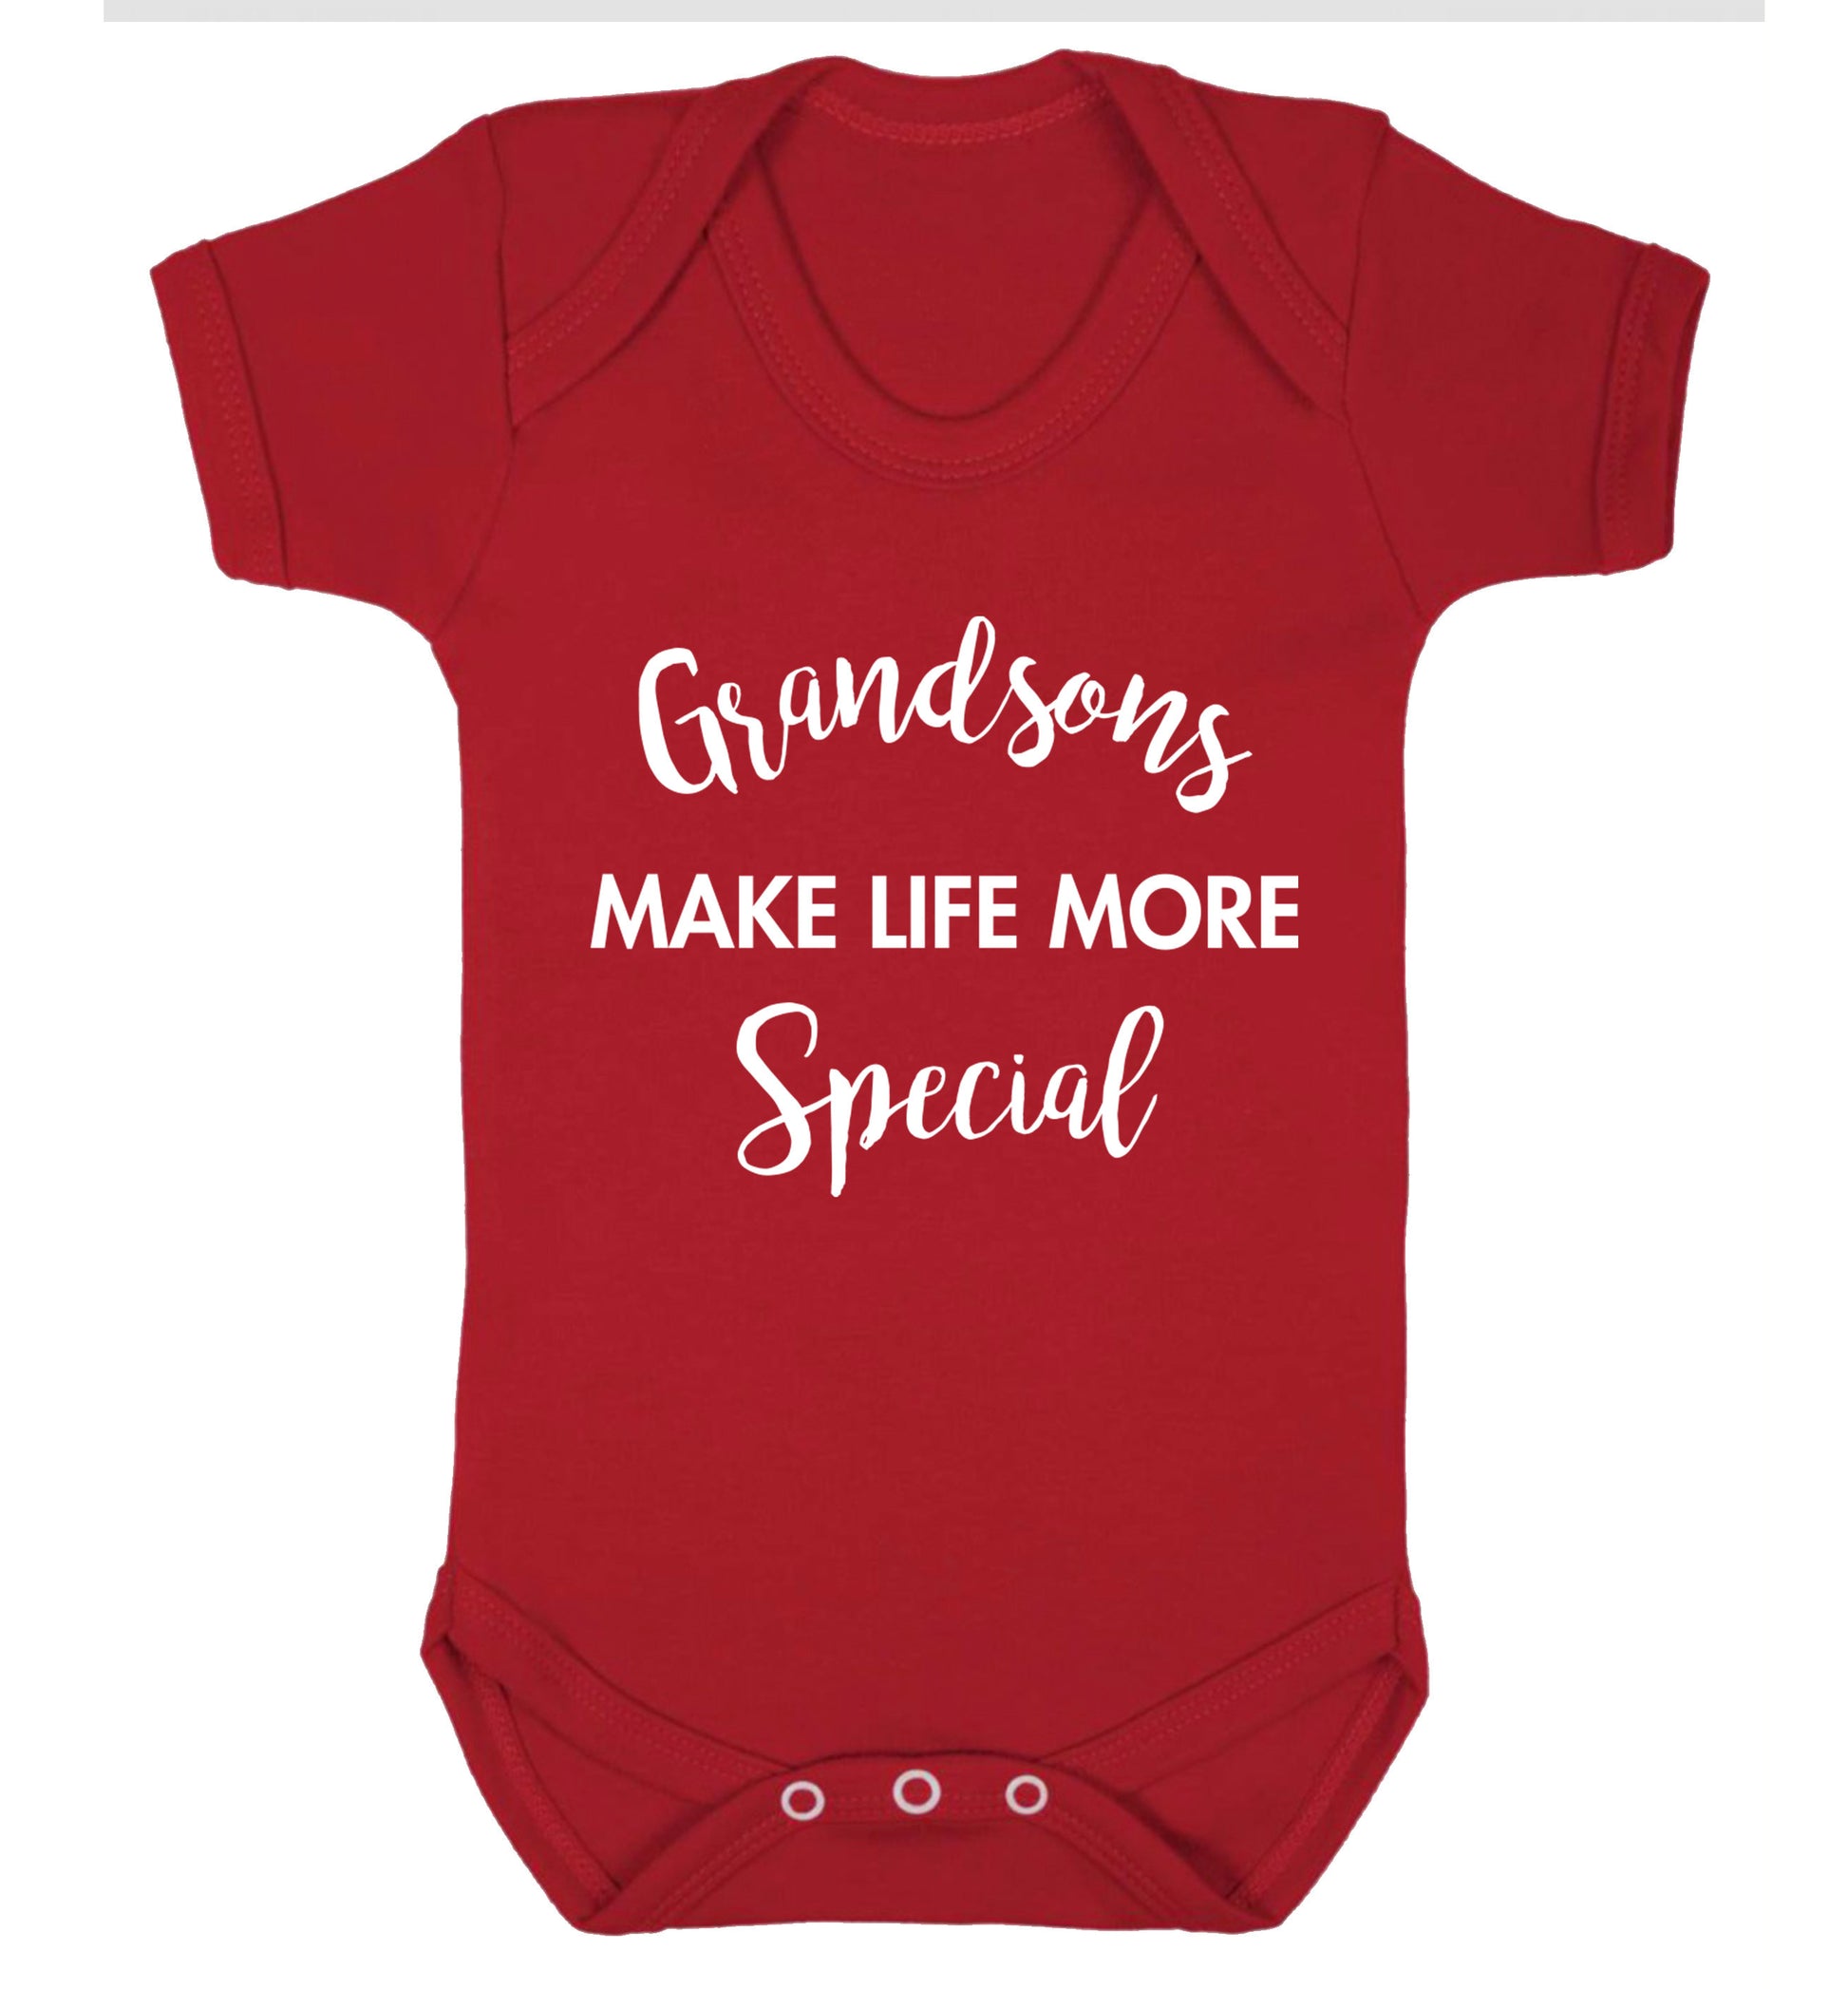 Grandsons make life more special Baby Vest red 18-24 months